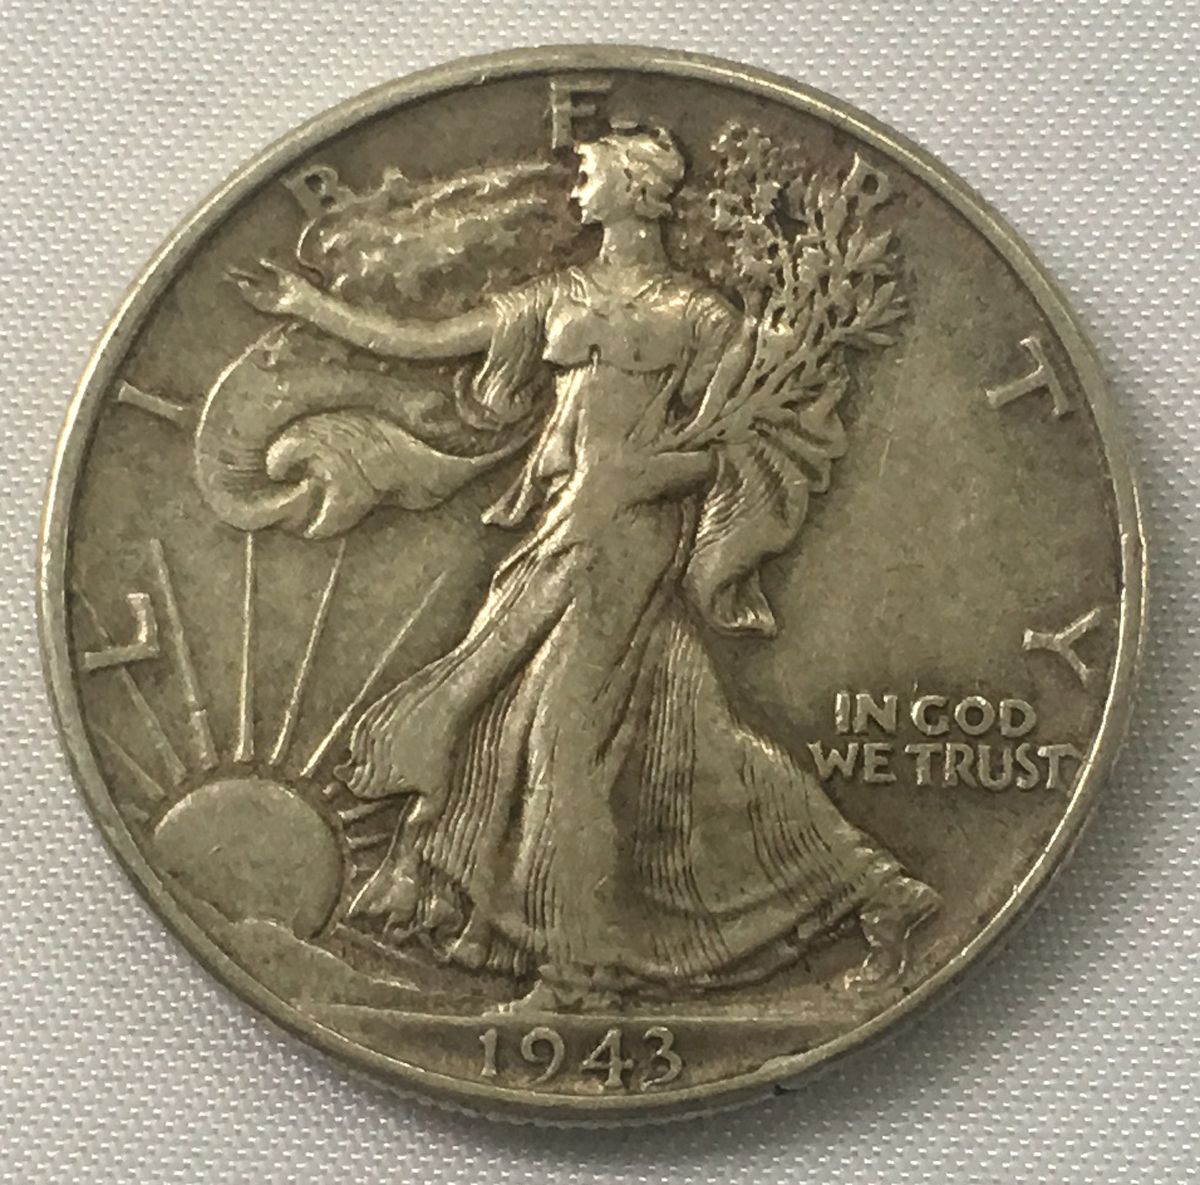 1943 P Walking Liberty Half Dollar - for sale, buy now online - Item #1415611200 x 1185